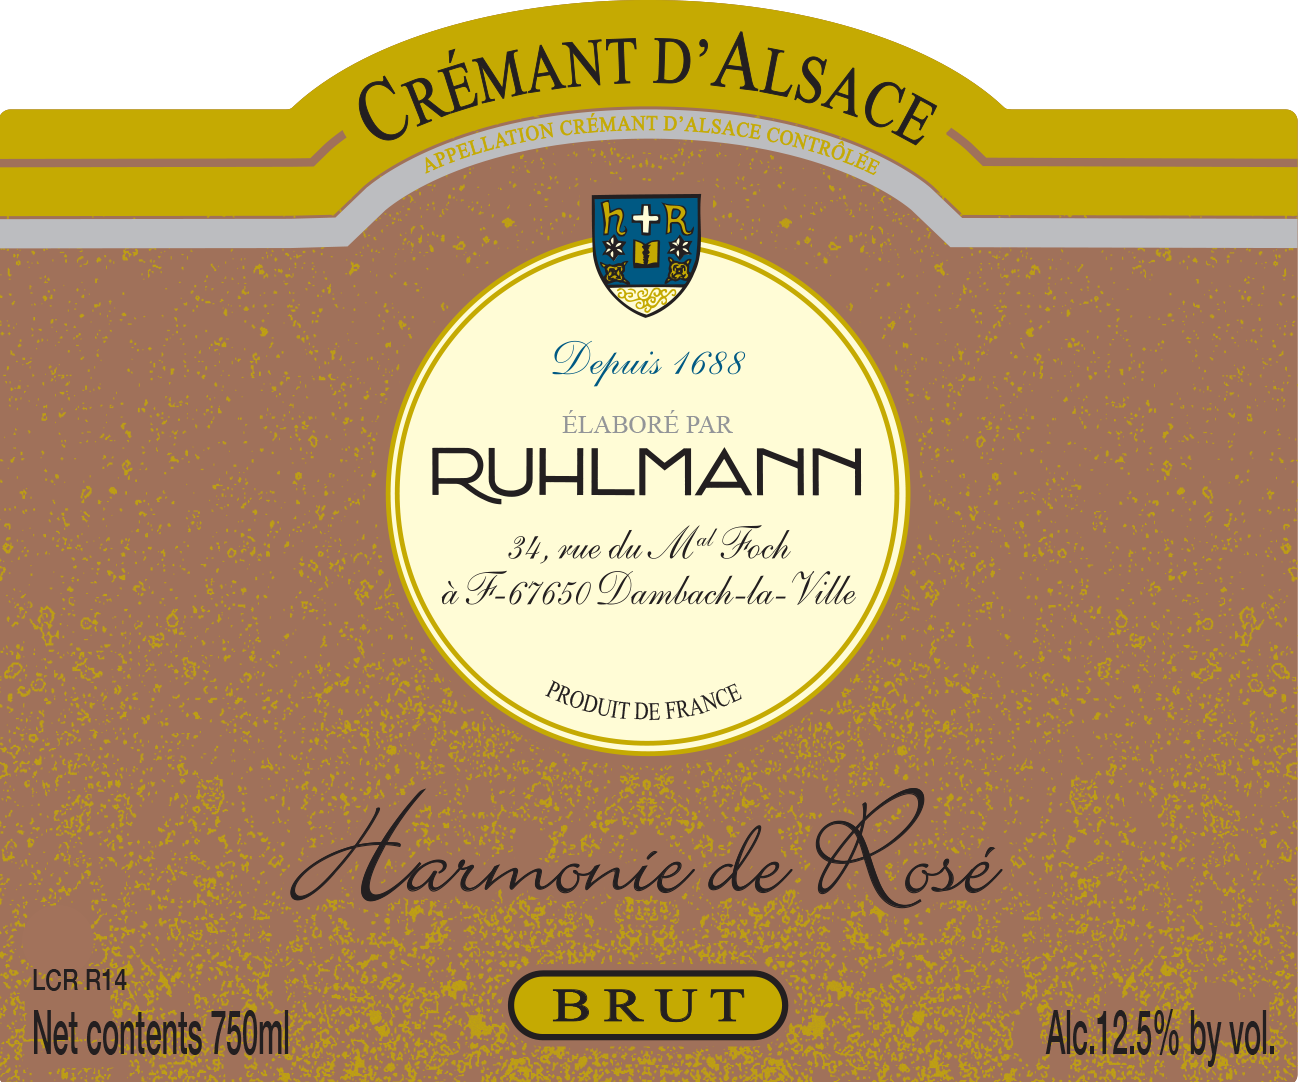 Ruhlmann Cremant d'Alsace Brut Rose front label